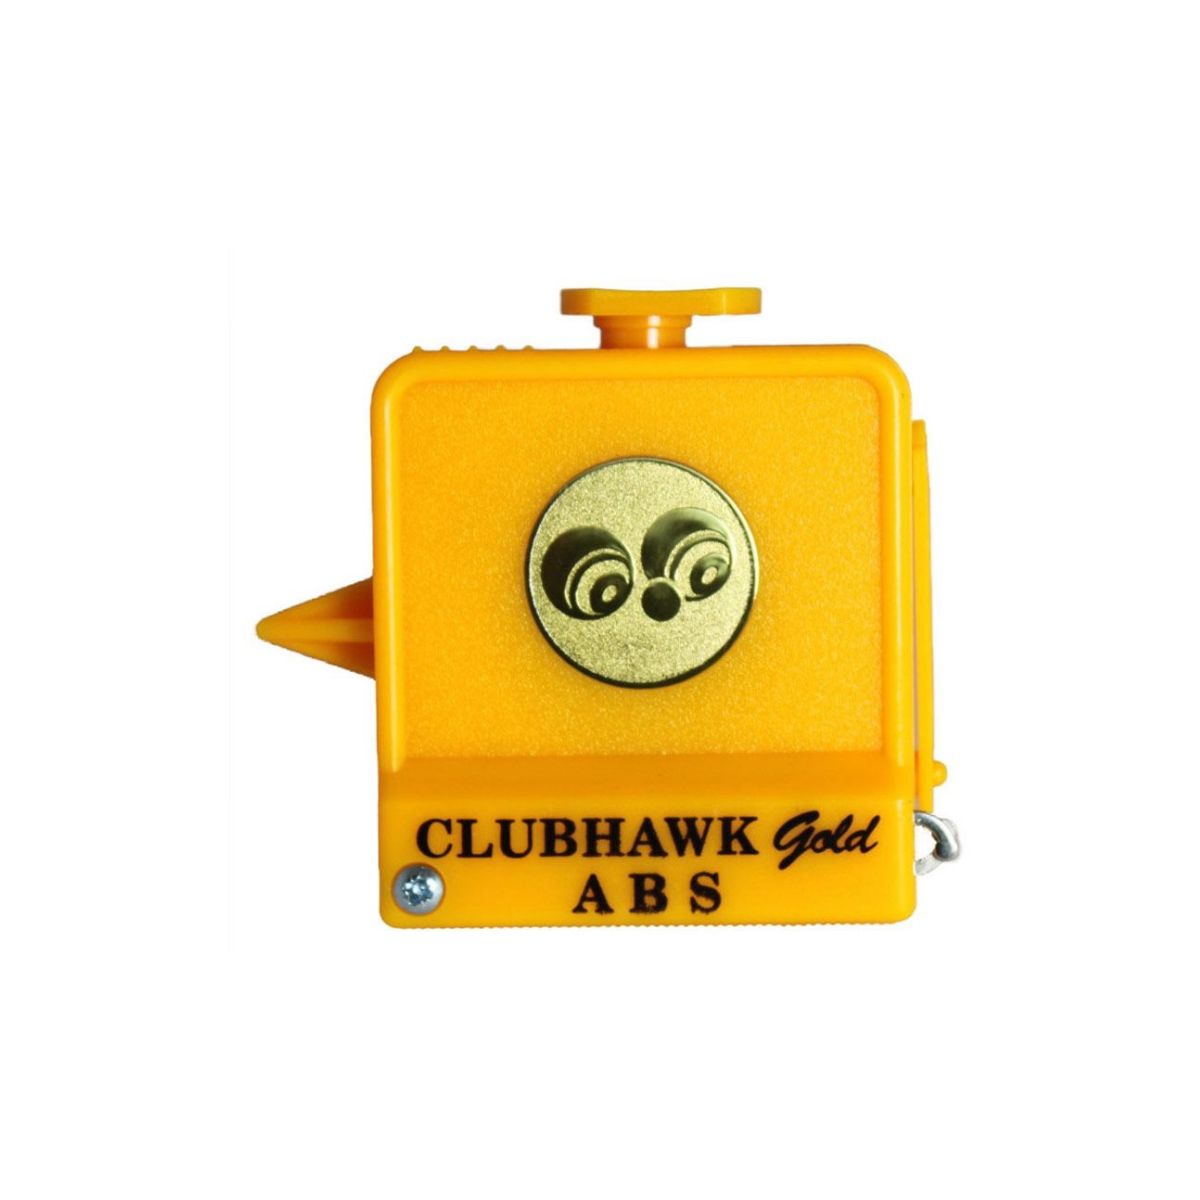 Henselite clubhawk gold abs bowls measure - 5